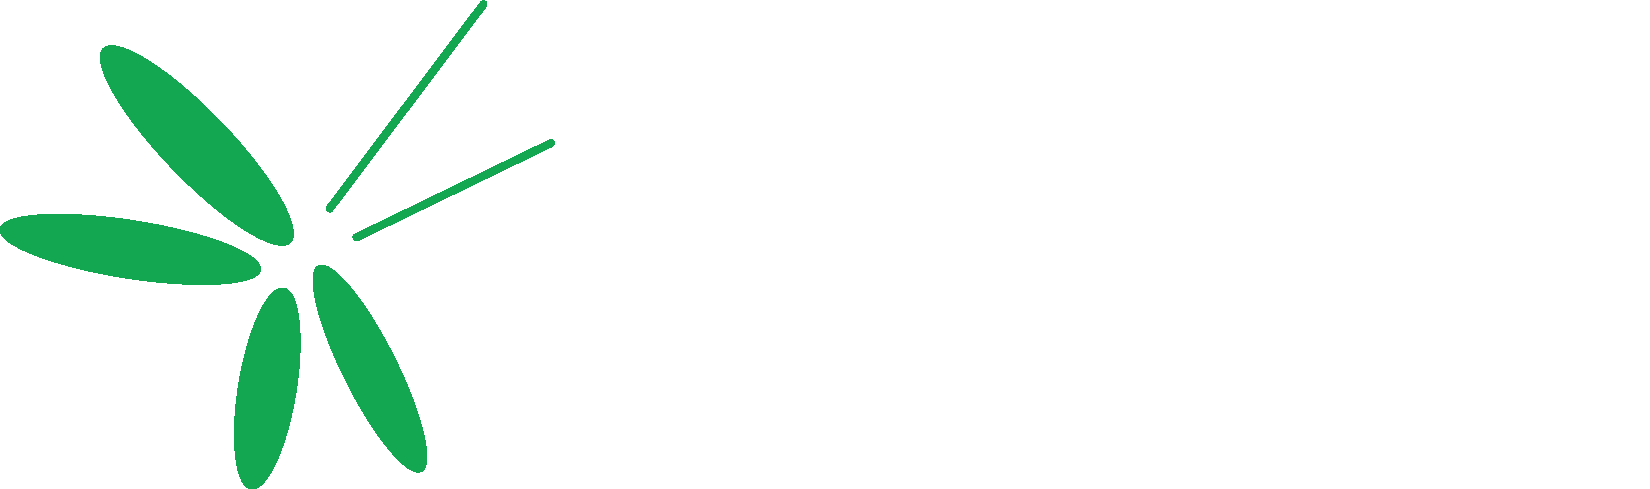 Abair Lavery Logo